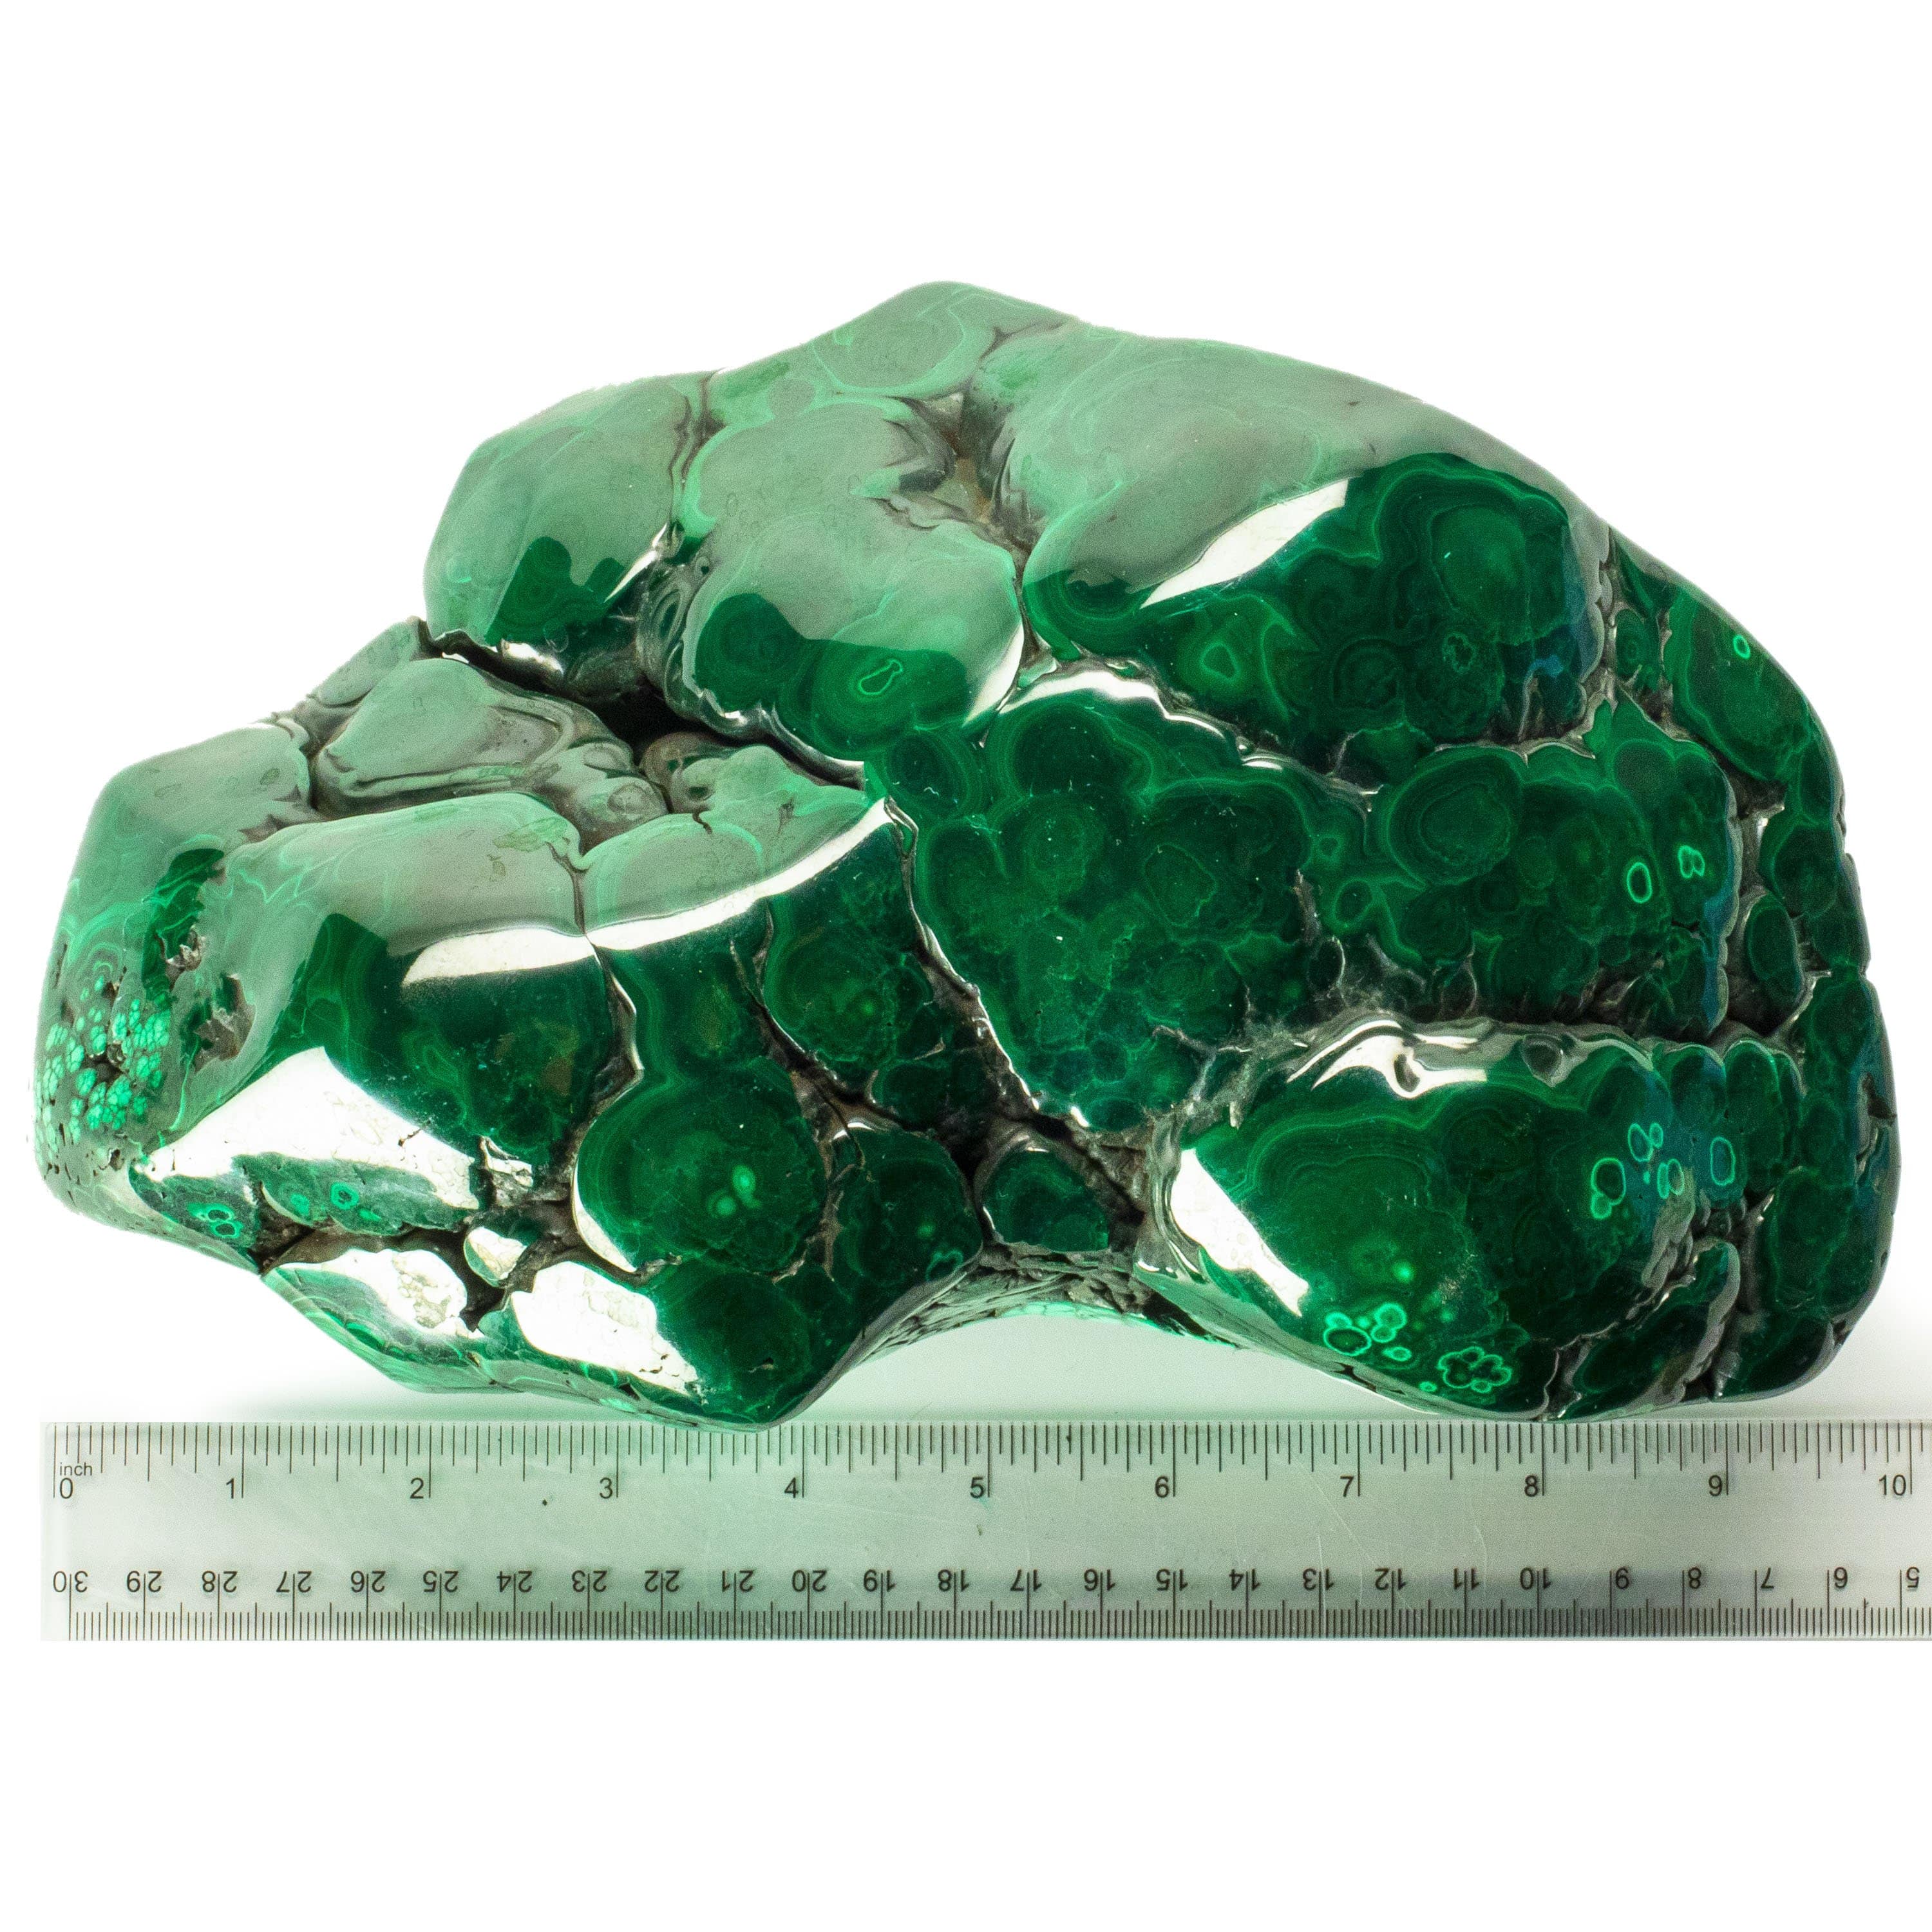 Kalifano Malachite Rare Natural Green Malachite Polished Freeform Specimen from Congo - 6.4 kg / 14.1 lbs MA4500.001